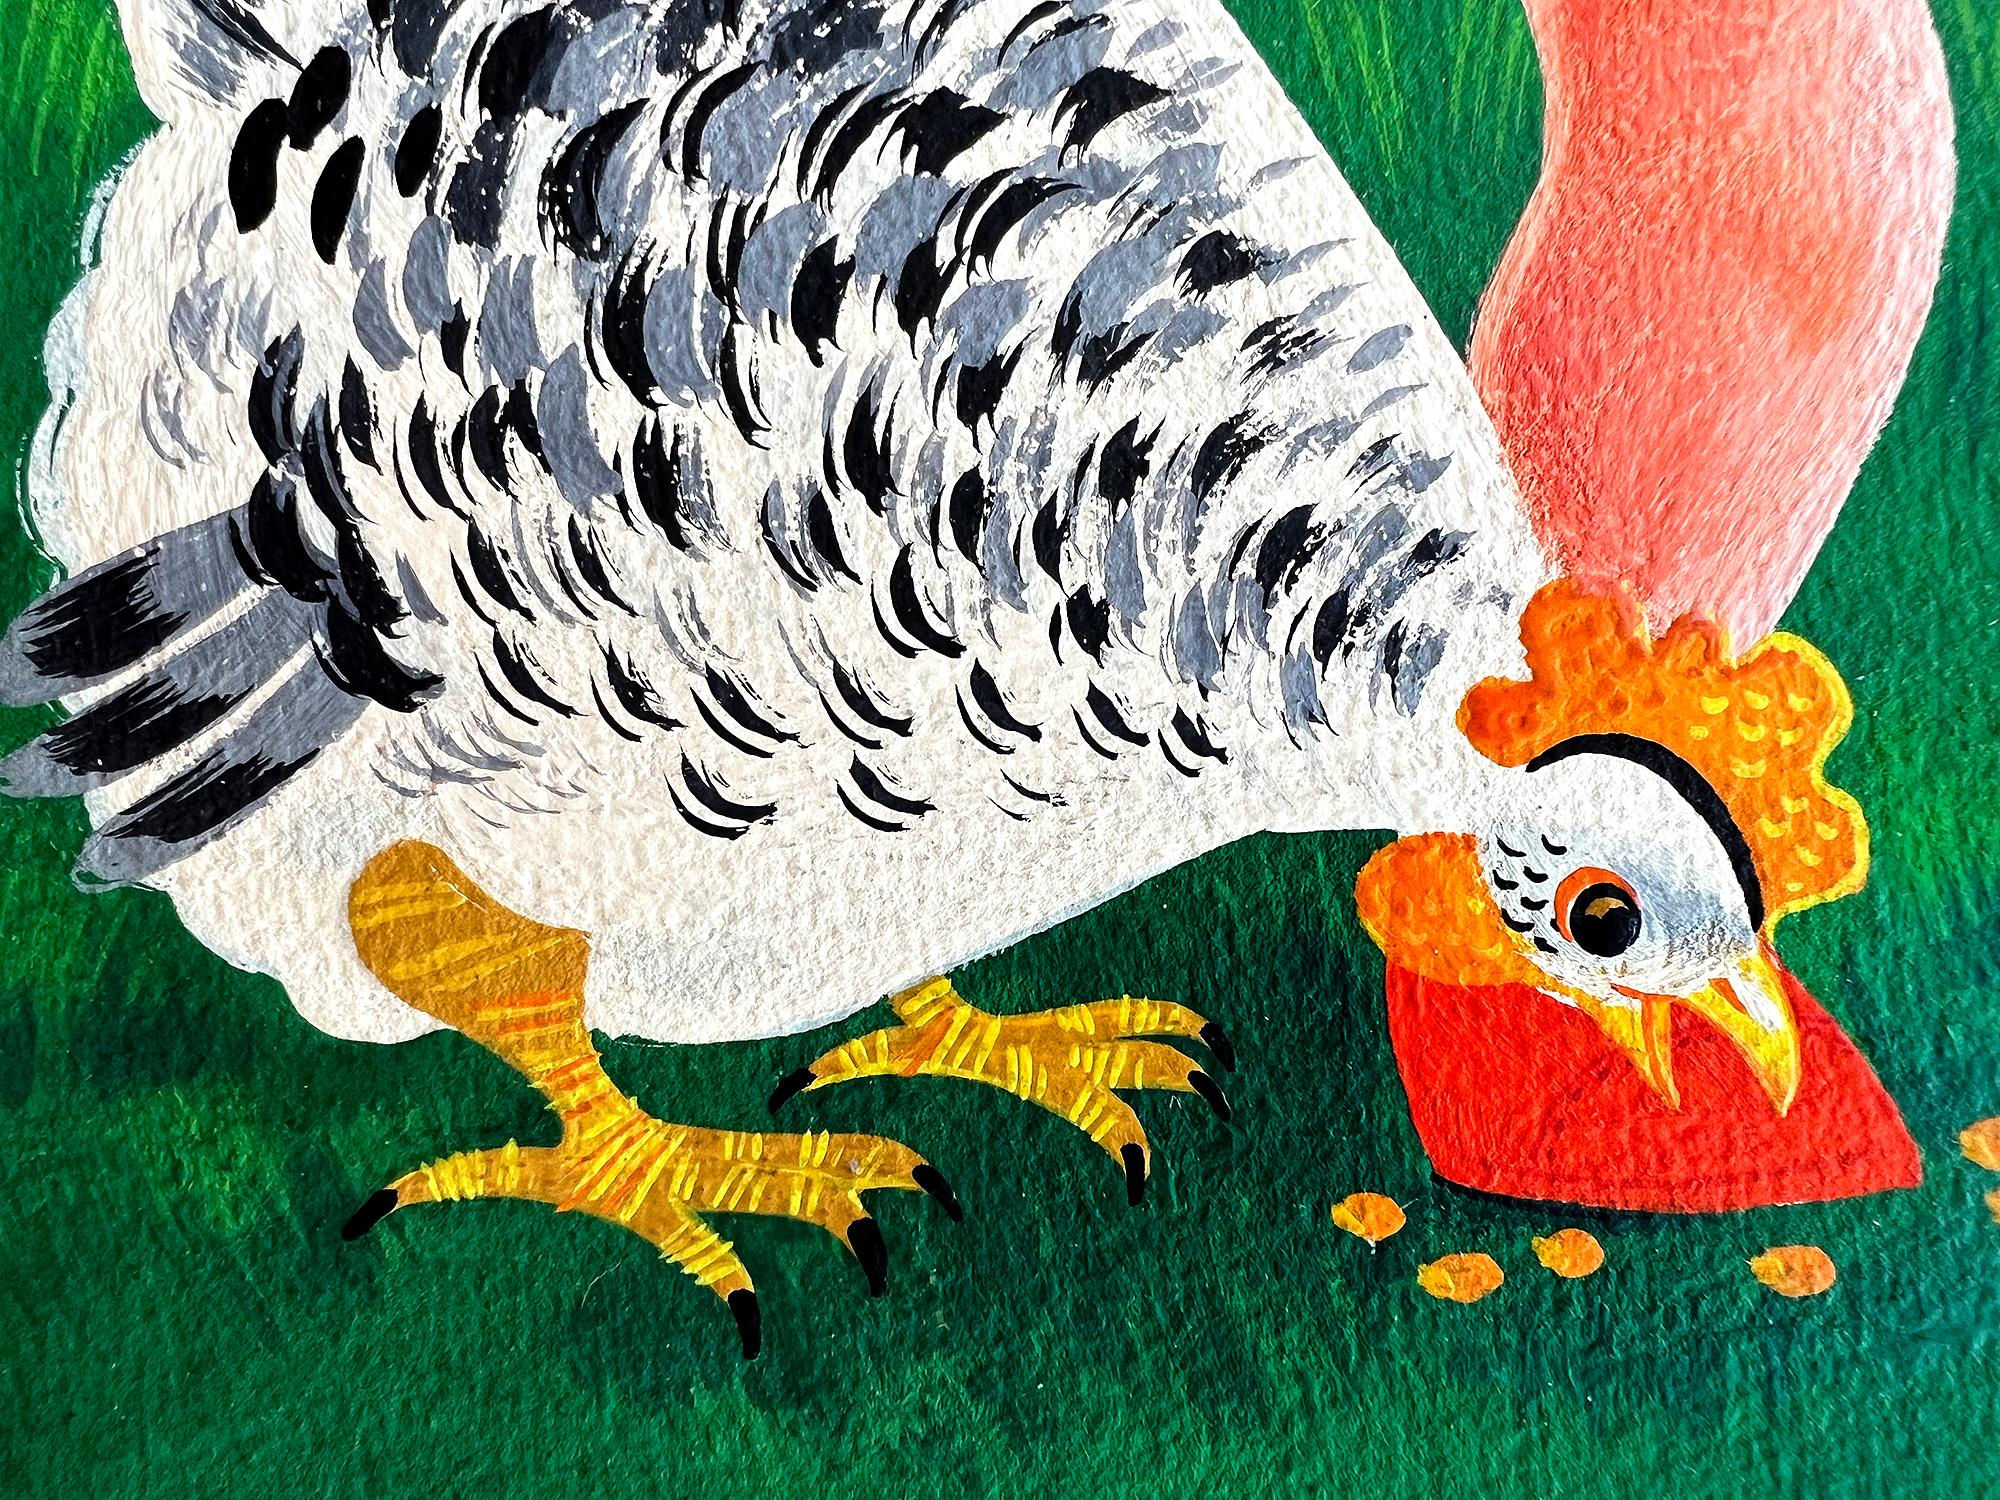 Horses, Chicken, Ducks, Rooster and  Pigs - Children's Book -Female Illustrator  - Feminist Painting by Retta Scott